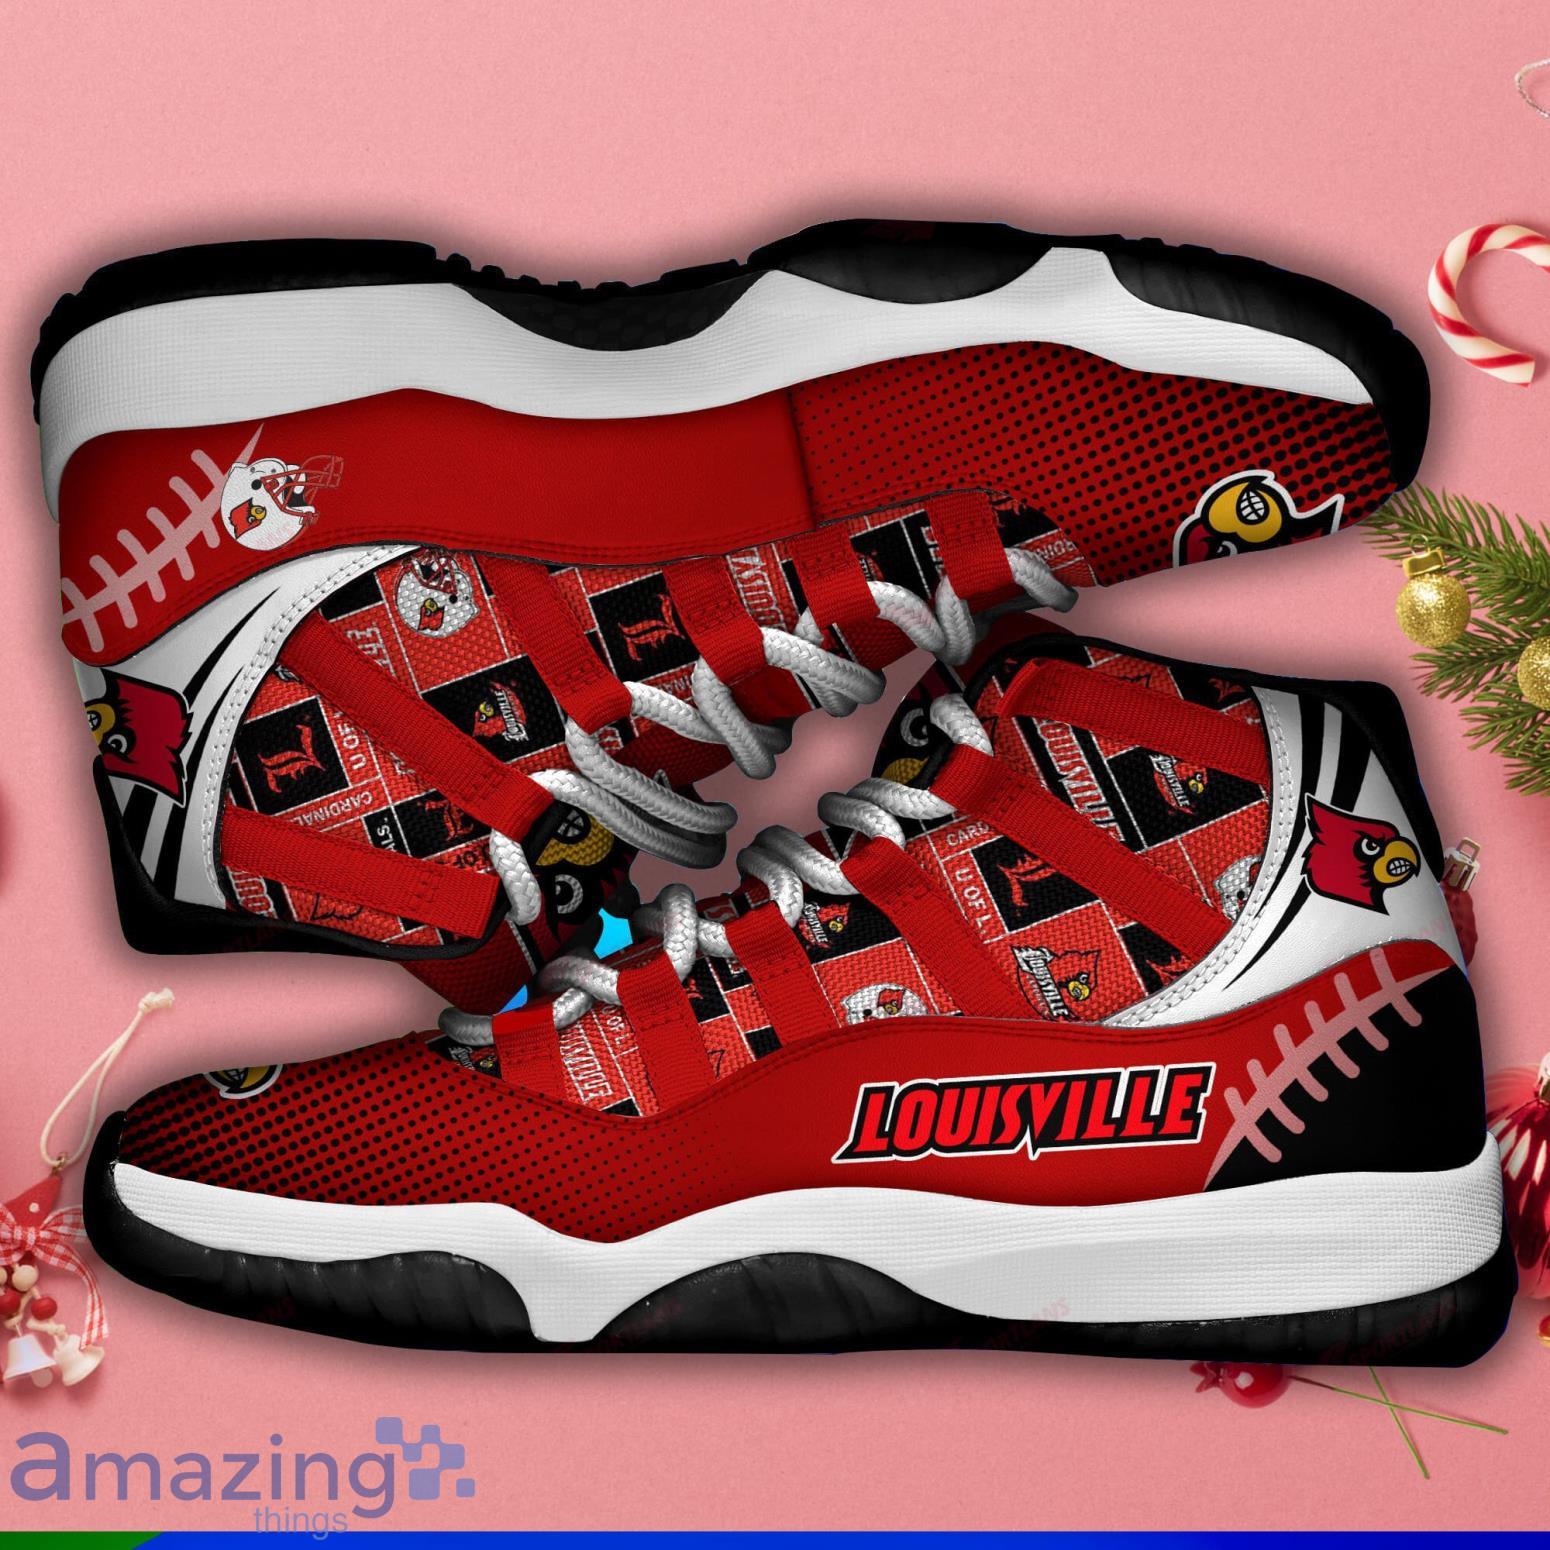 louisville cardinals shoes